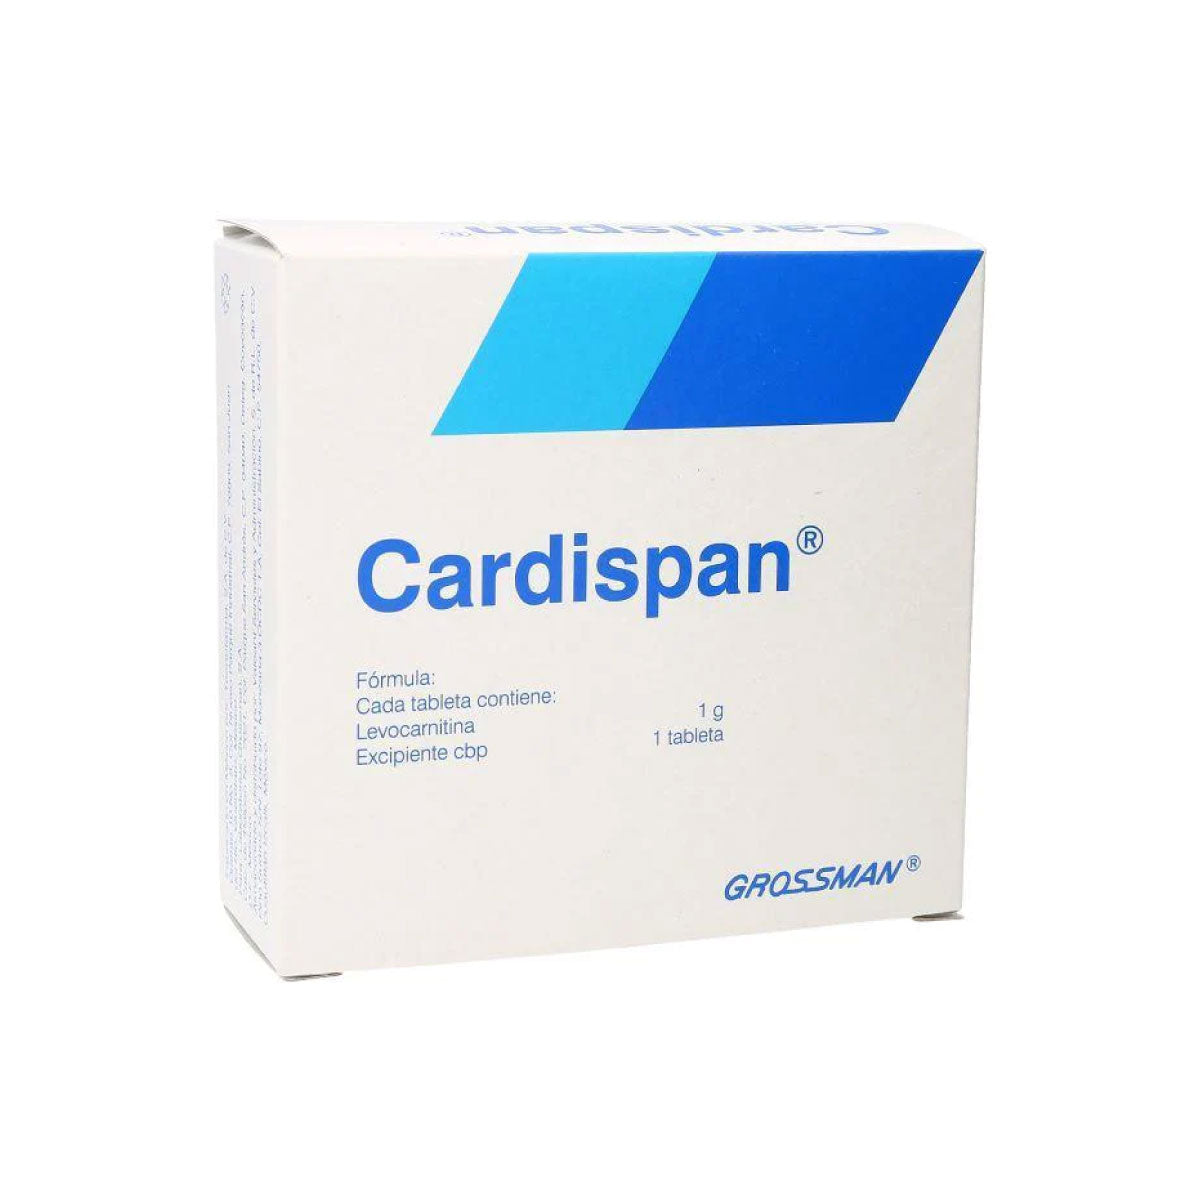 Cardispan (Levocarnitina) Tabs 1g Cja c 20 tabs